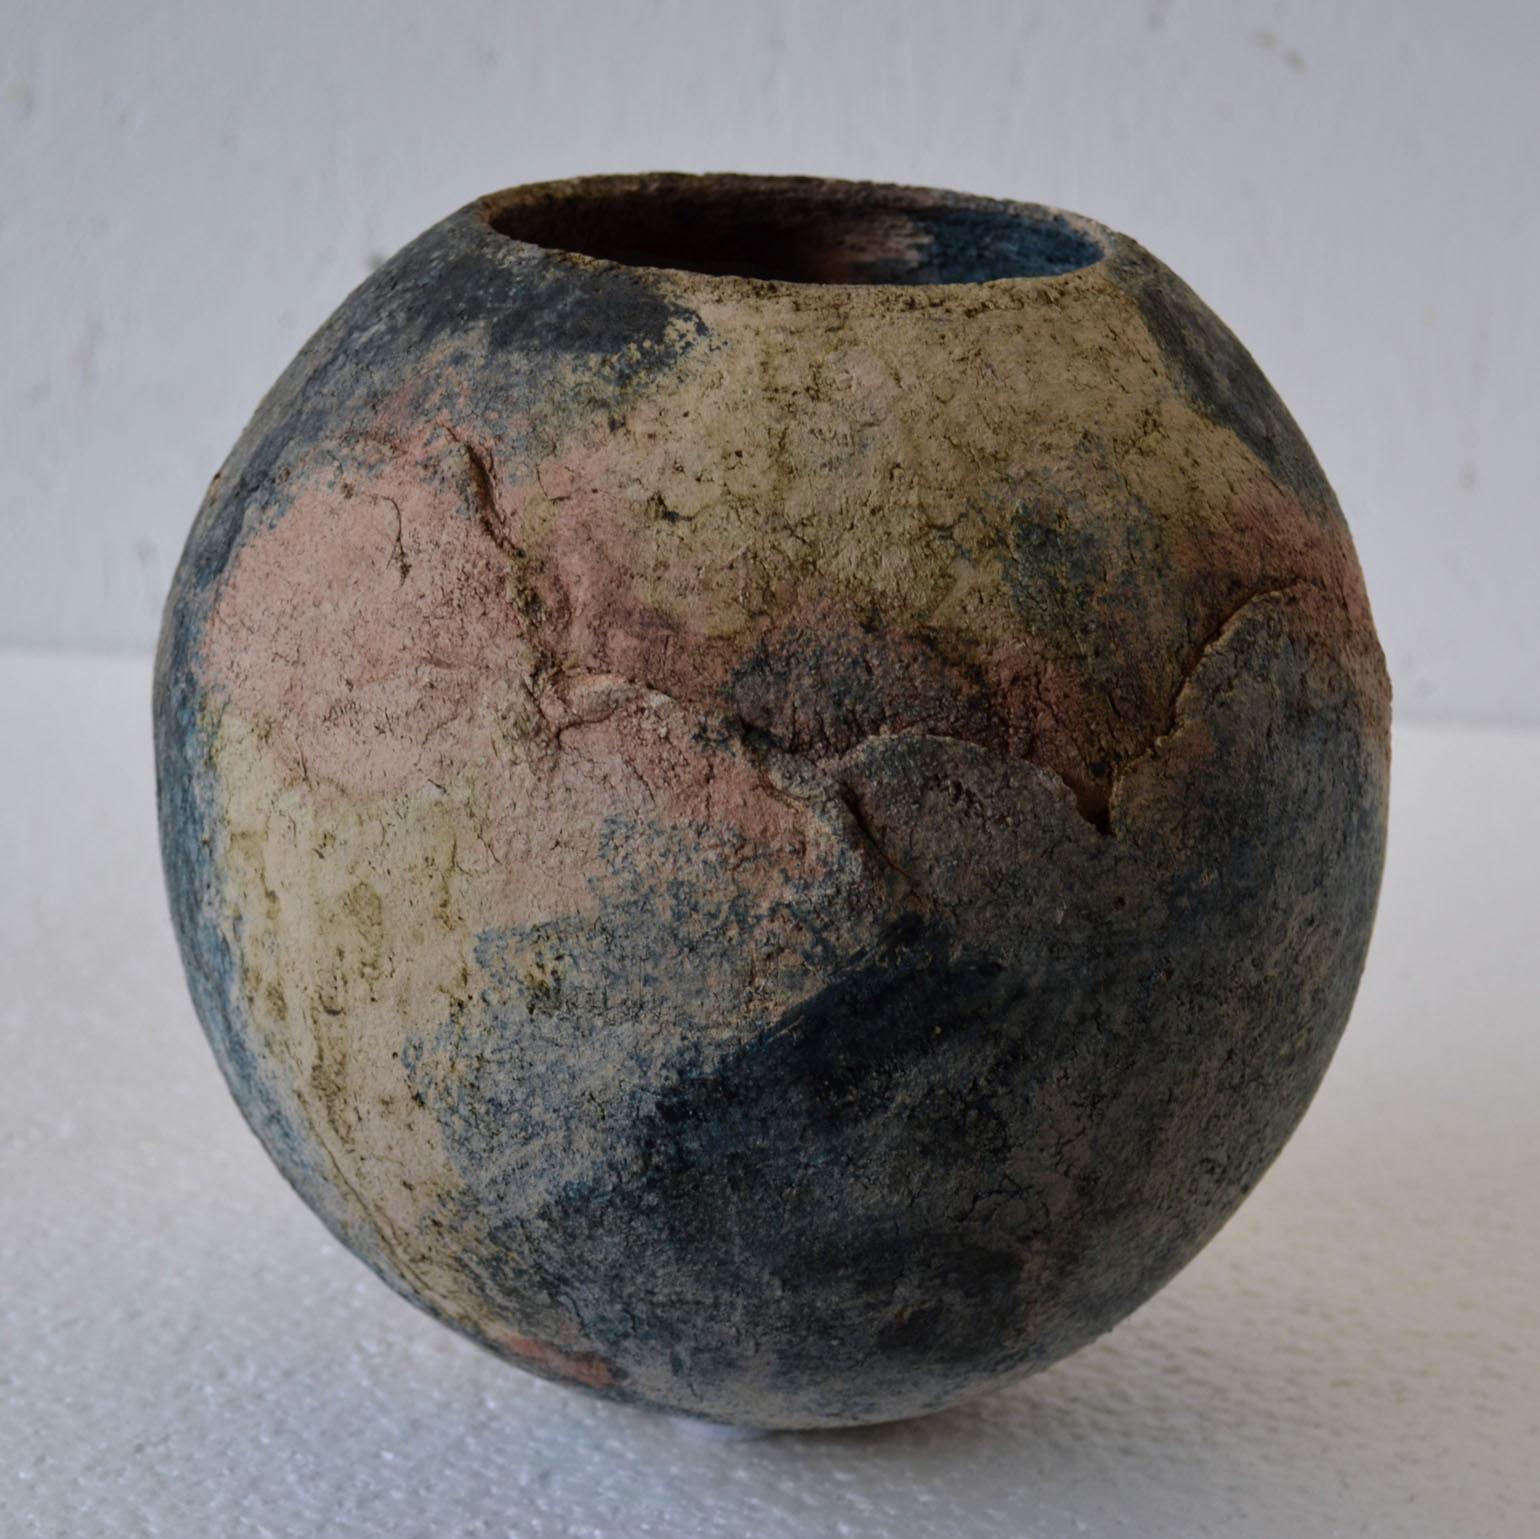 Ceramic Decorative Ball Shape Textured Studio Vase in Earth Tones For Sale